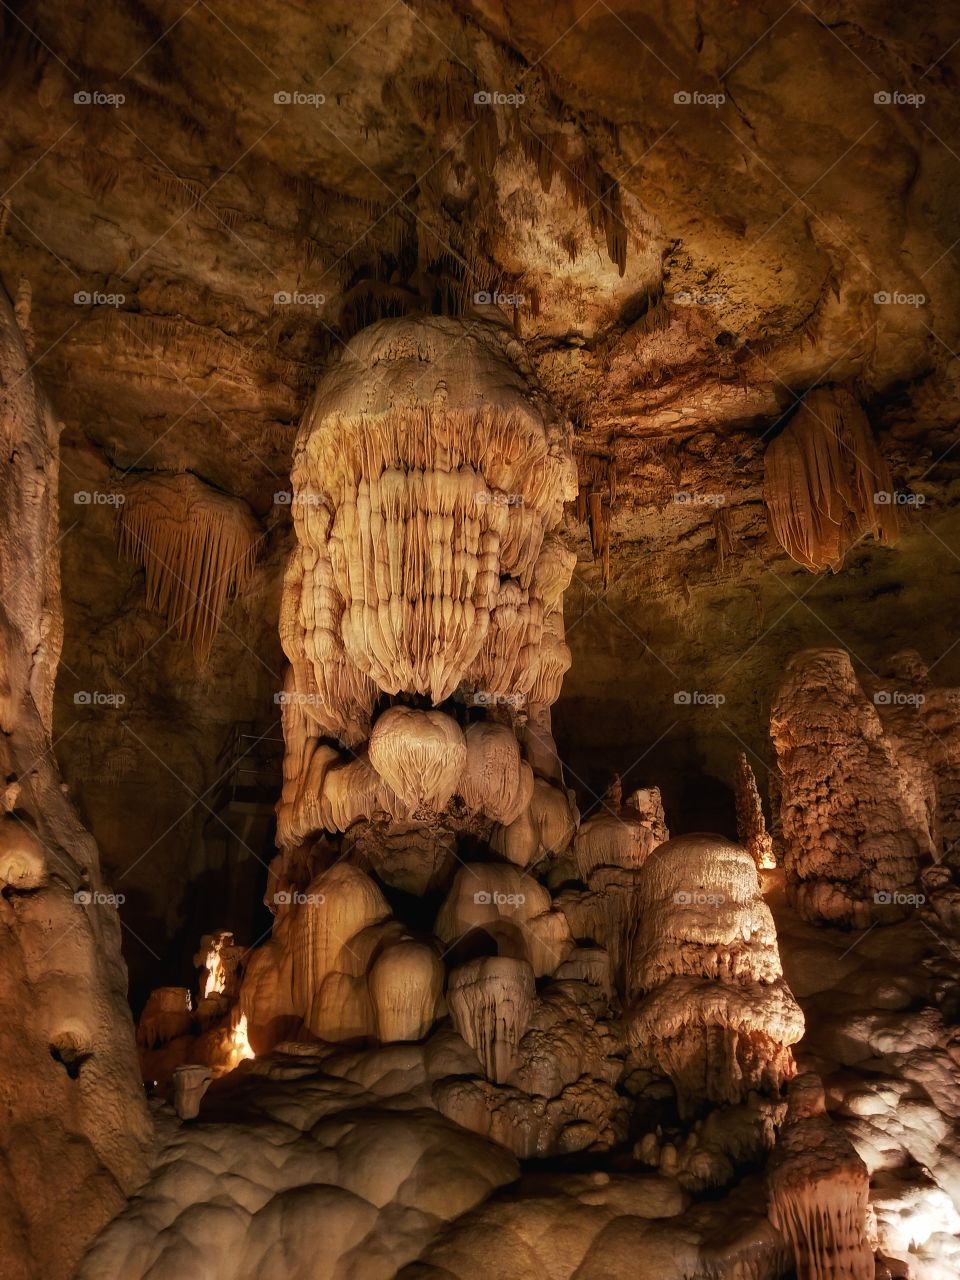 Exploring the natural caverns